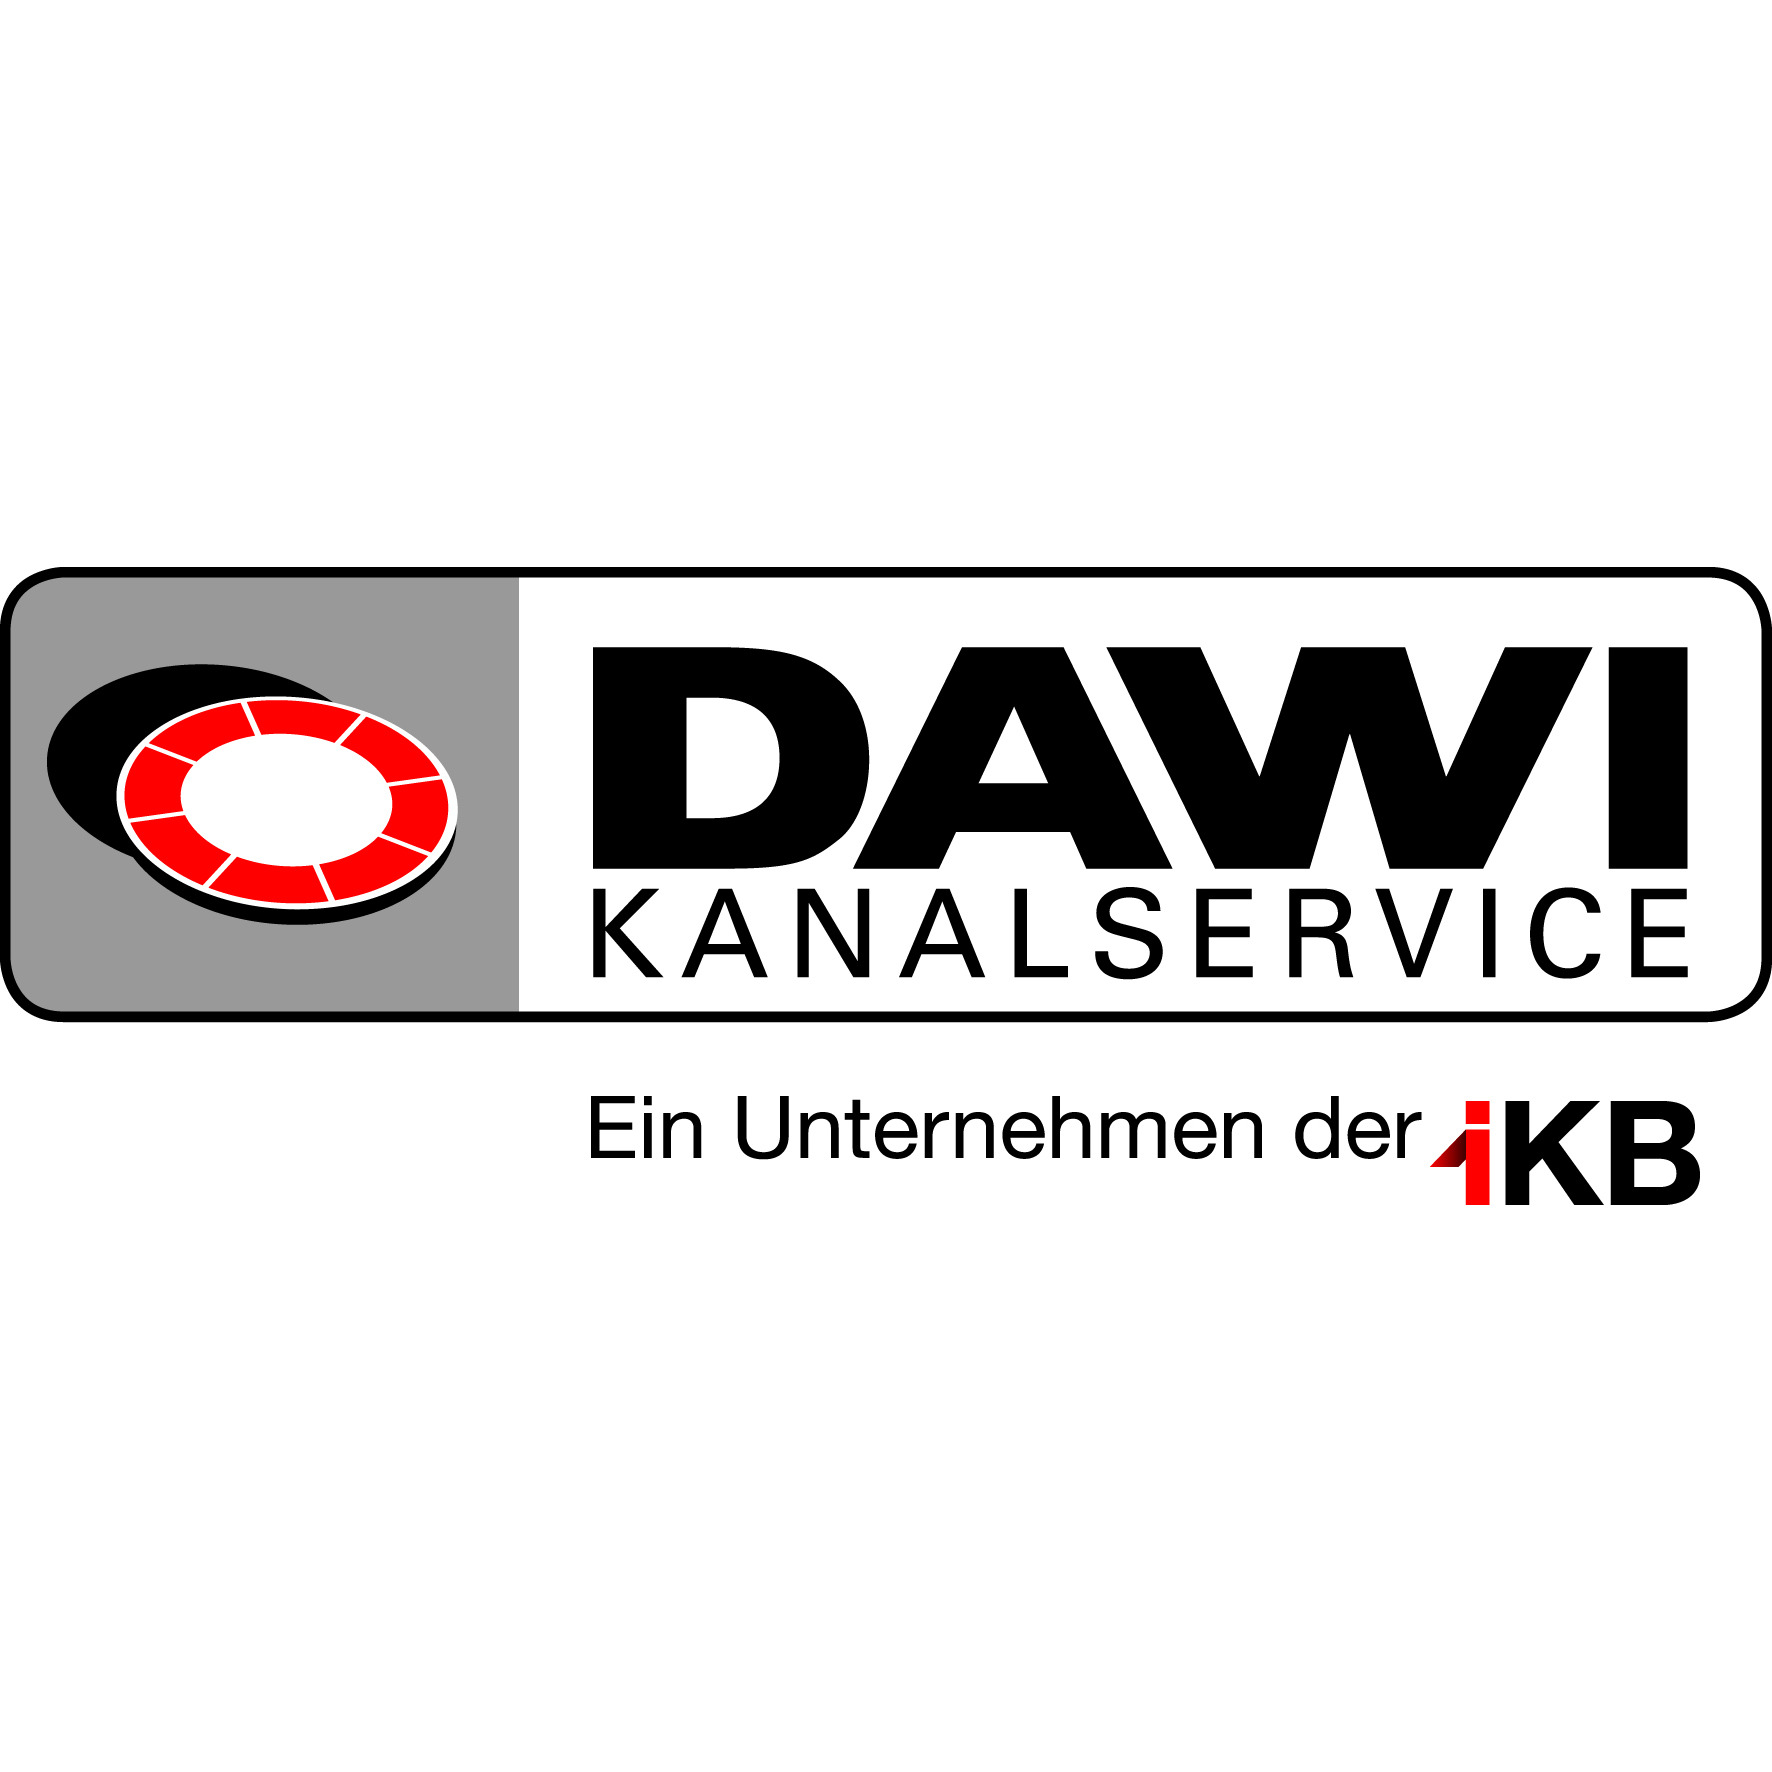 DAWI Kanalservice GmbH in 6380 St. Johann in Tirol Logo